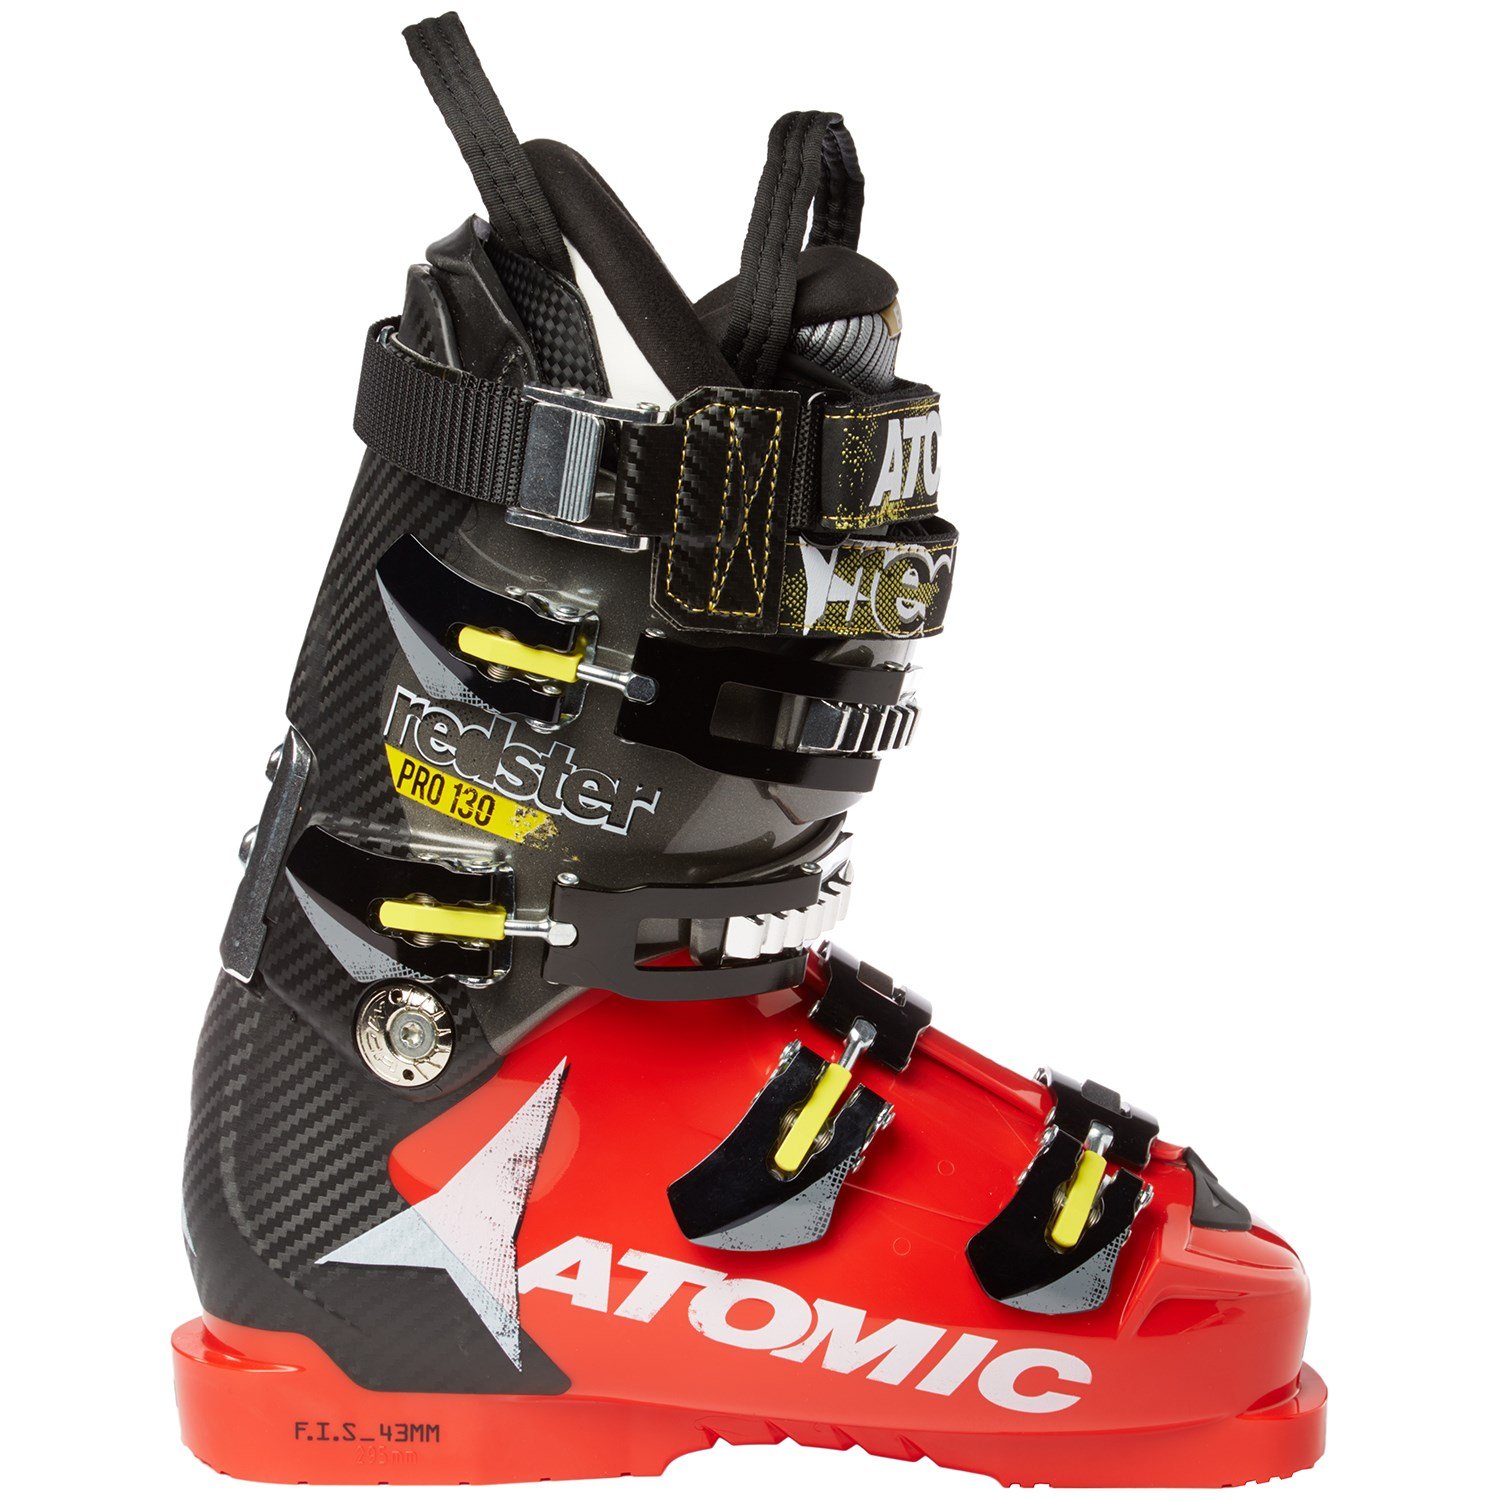 Atomic Redster Pro 130 Ski Boots 2014 | evo